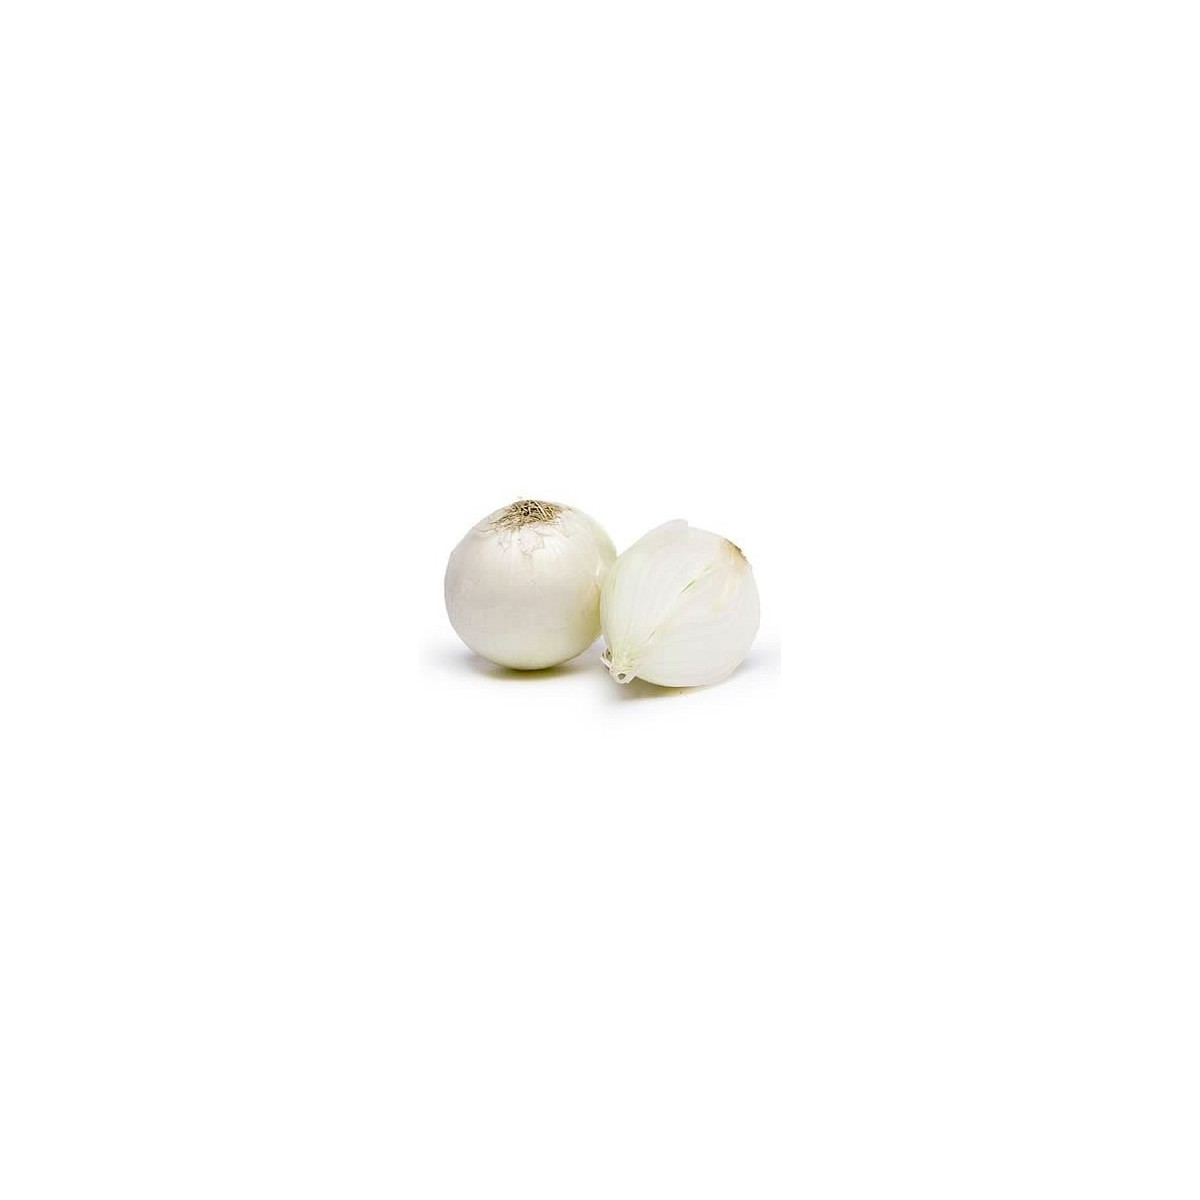 Cibule jarní bílá - Allium cepa - semena - 250 ks